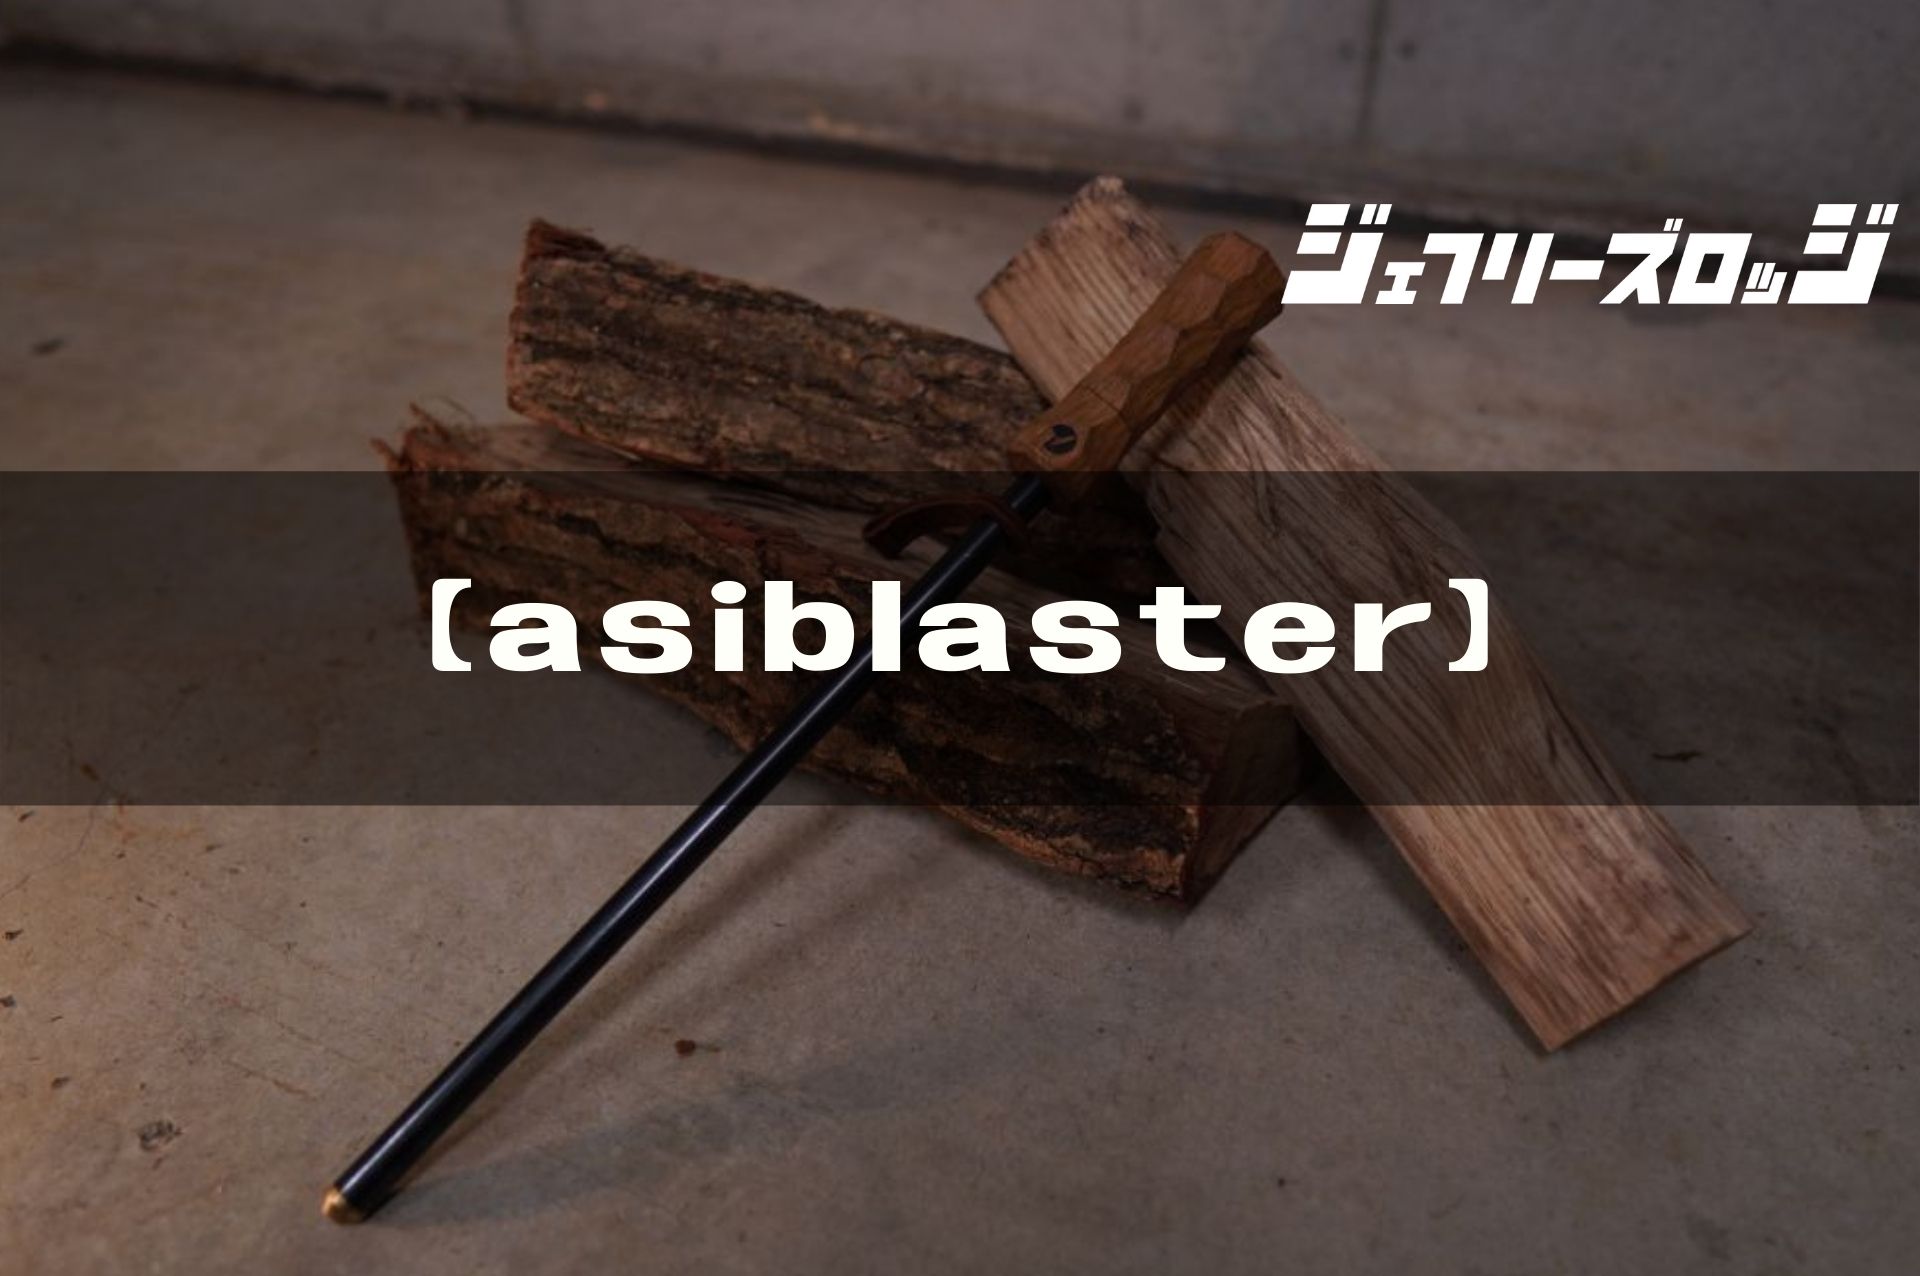 asiblaster (火吹き棒)】 焚き火を蘇らせる魔法の杖 by asimocrafts x 